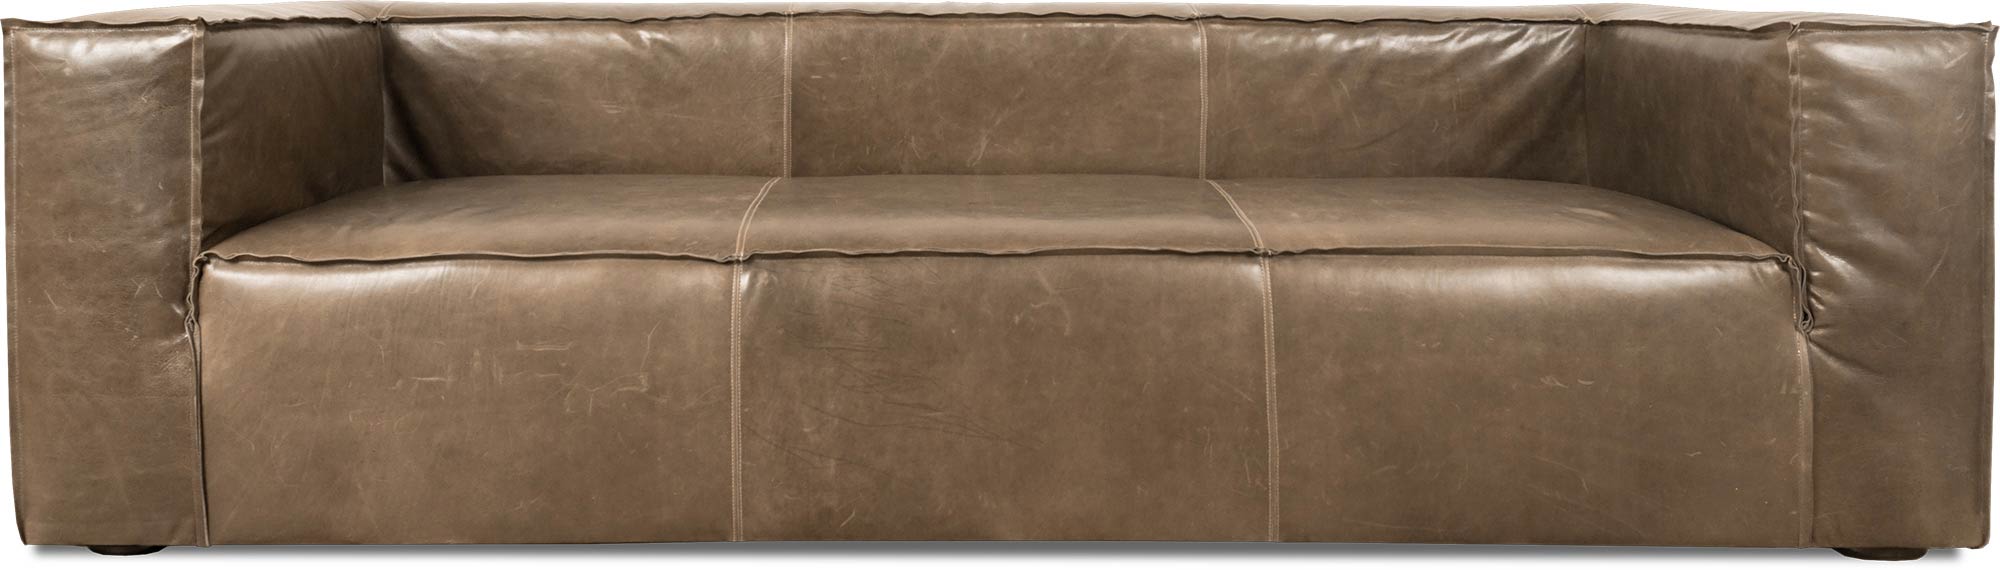 108 Johnny sofa in Dakota Putty leather